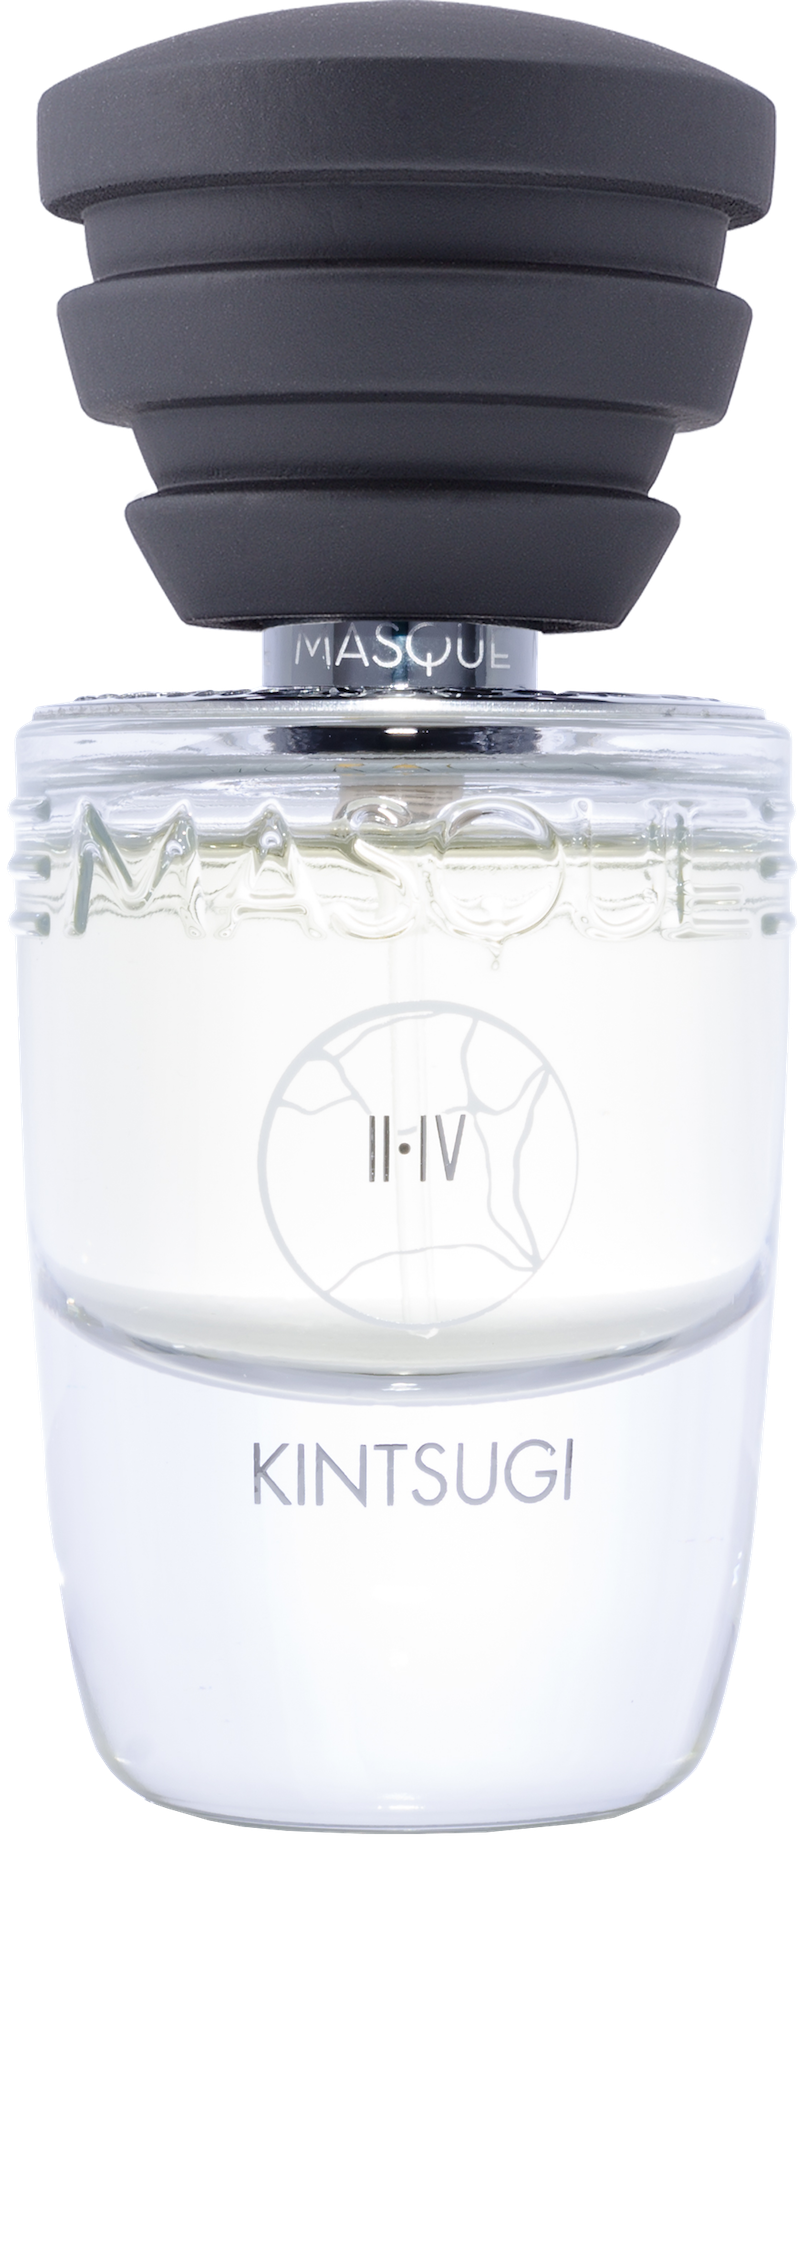 Masque Milano – Kintsugi – Eau de Parfum 35 ml 